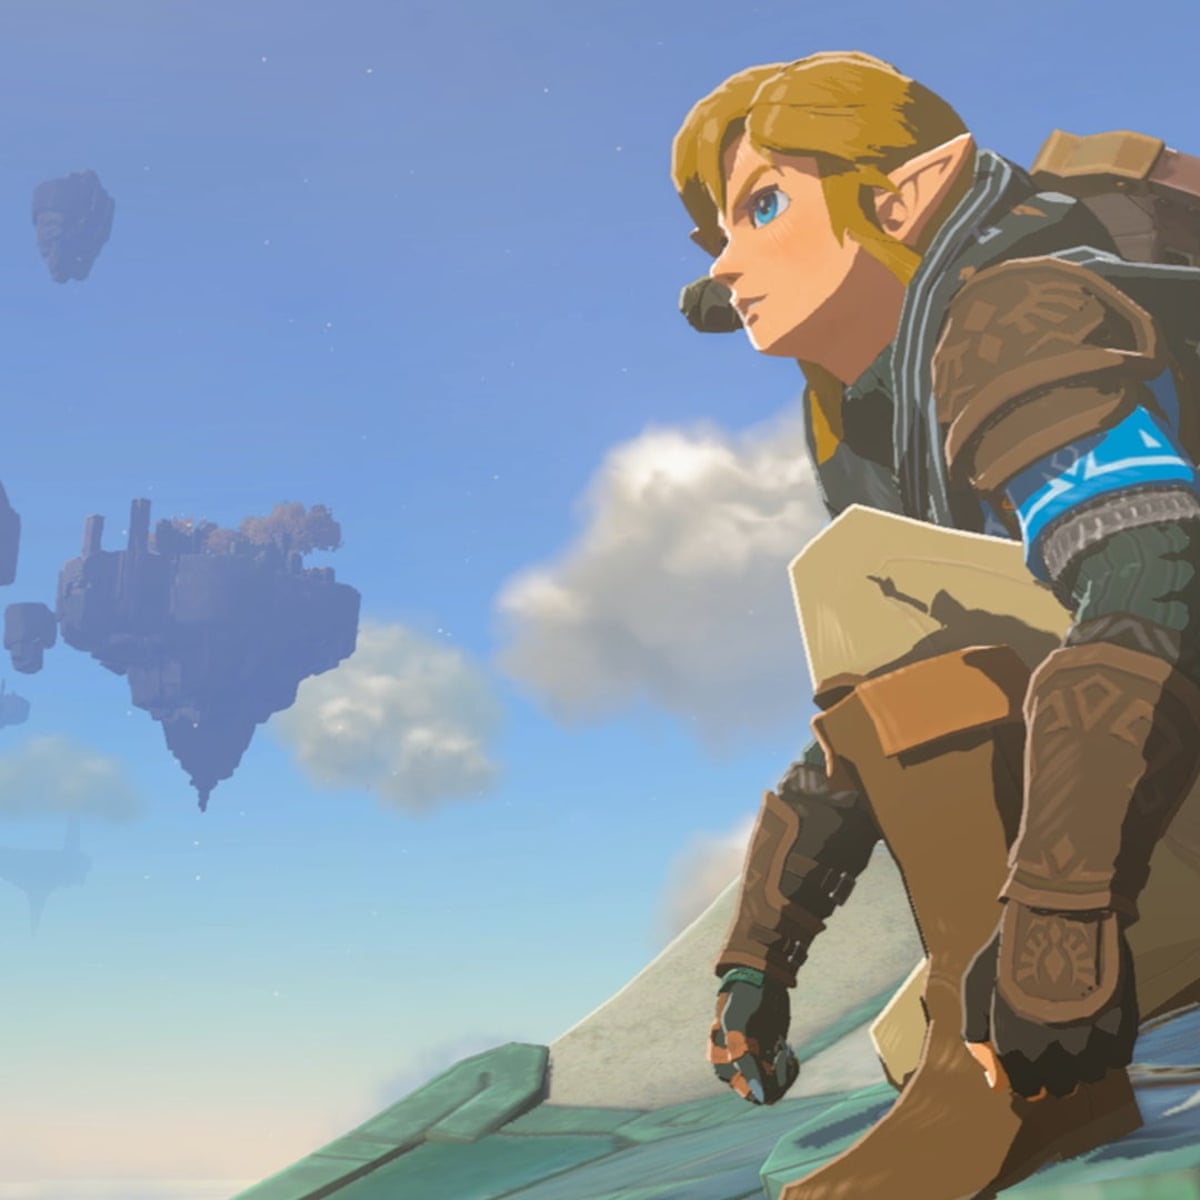 Beginner tips for The Legend of Zelda: Tears of the Kingdom